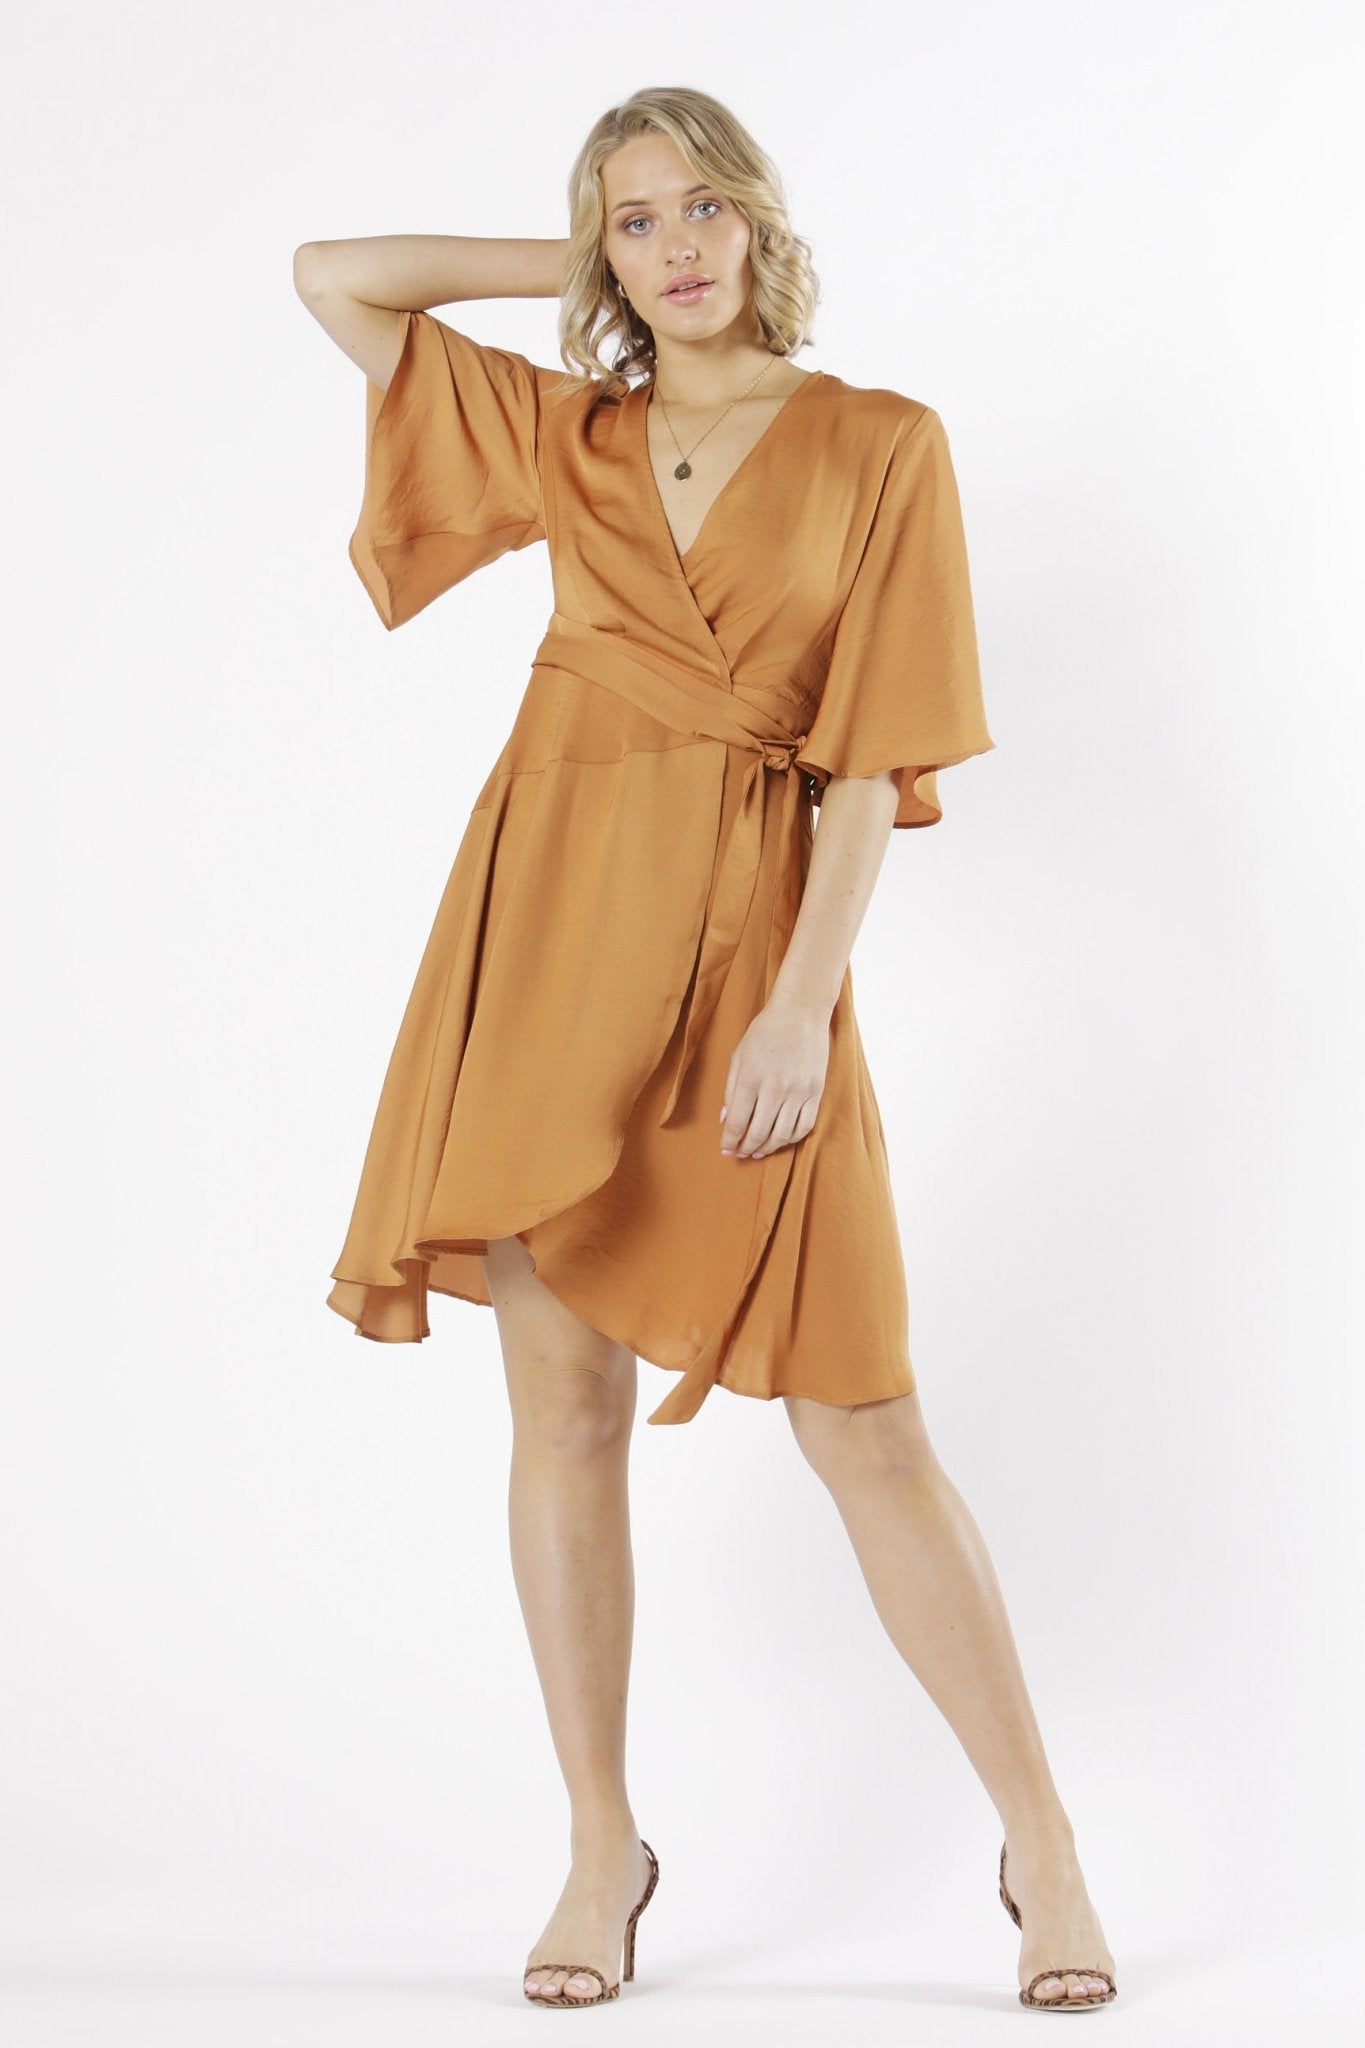 Fate + Becker Mariella Wrap Dress in Apricot - Hey Sara